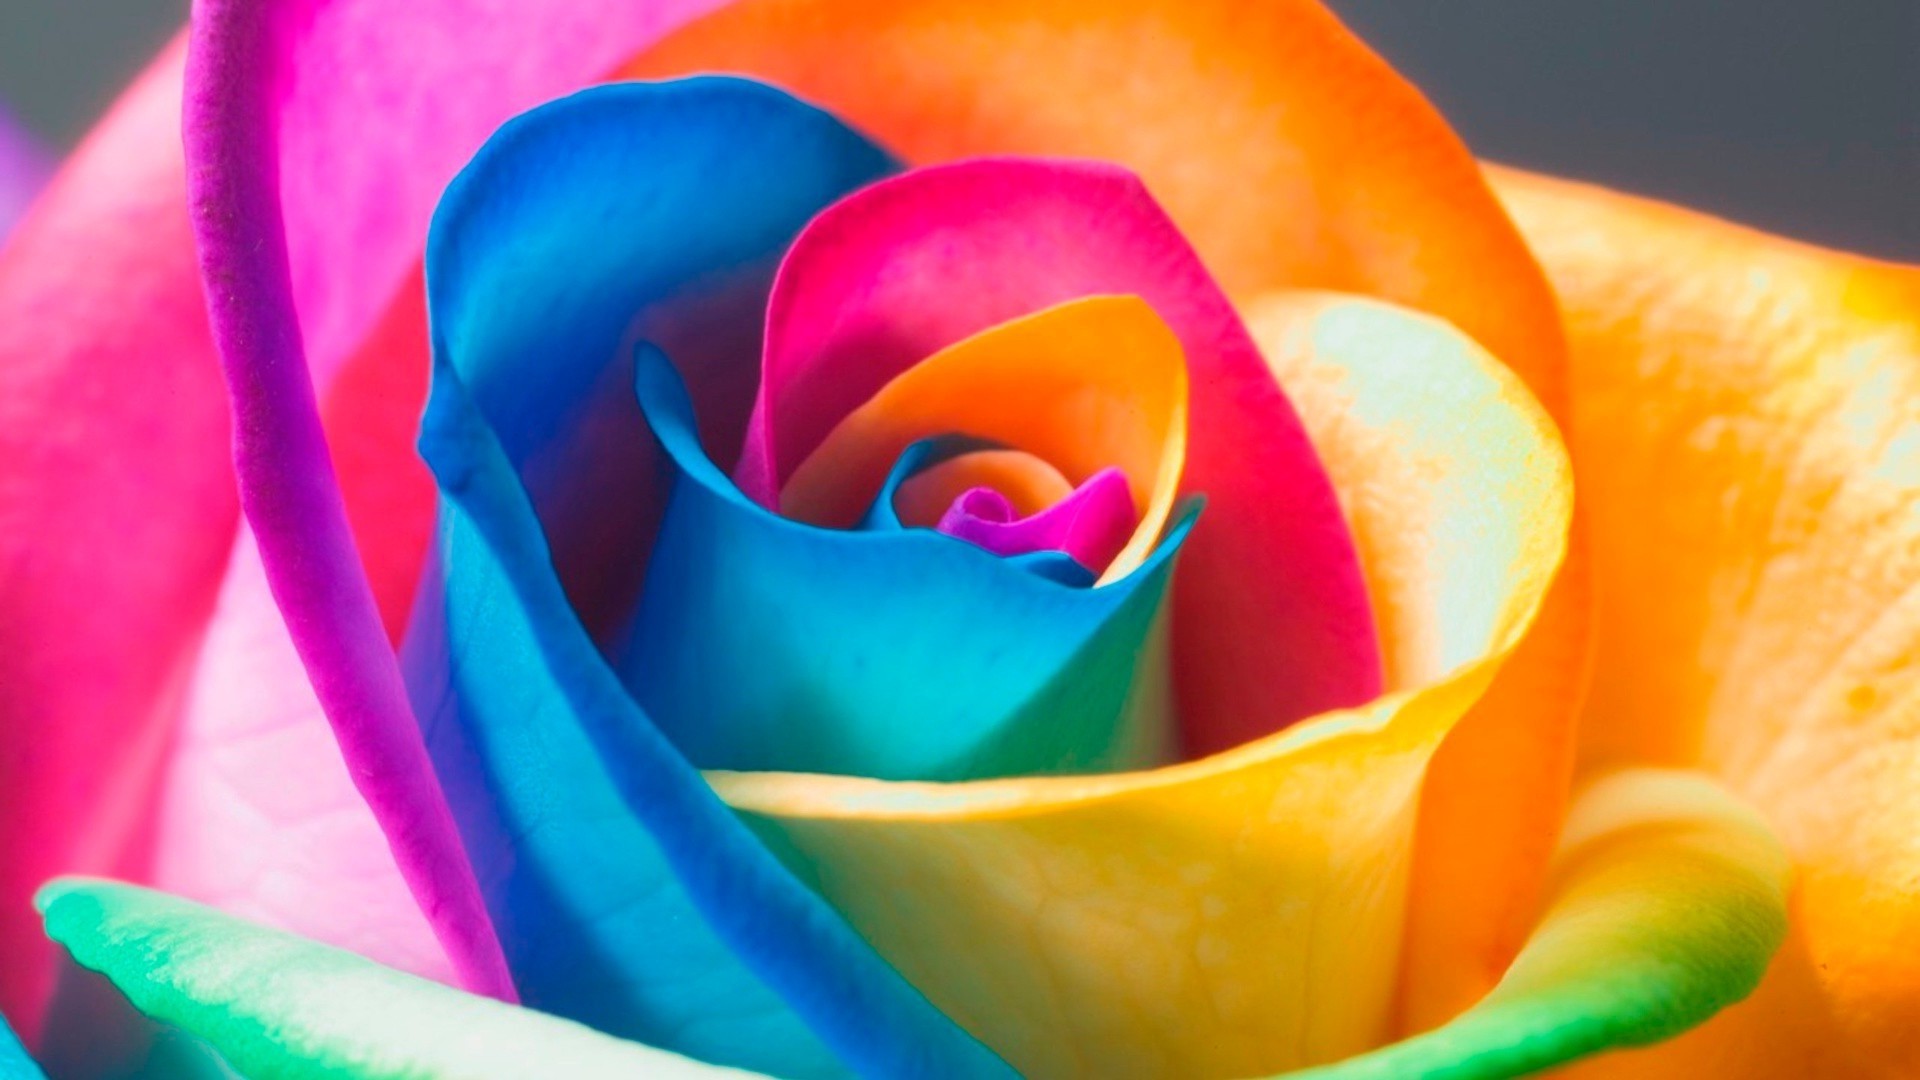 Rainbow Rose Image